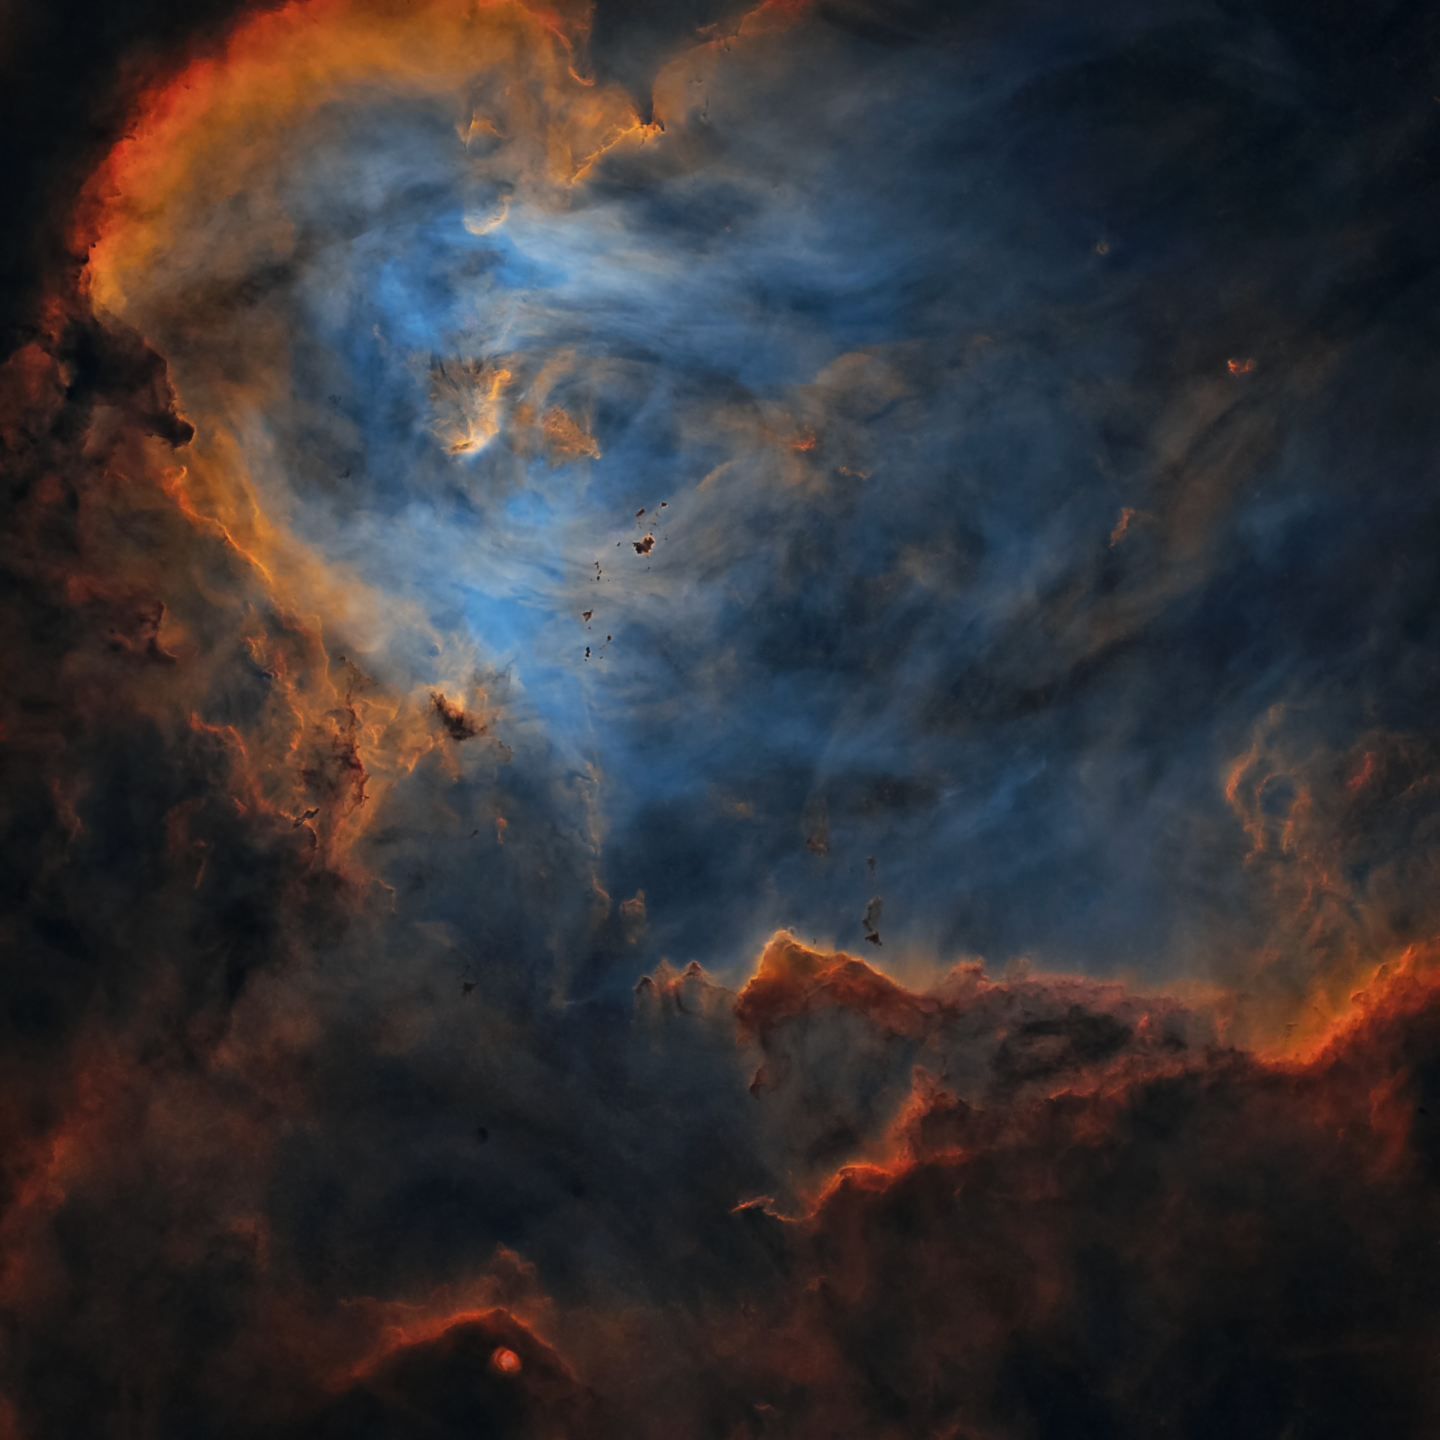 Blue and orange nebulae swirls